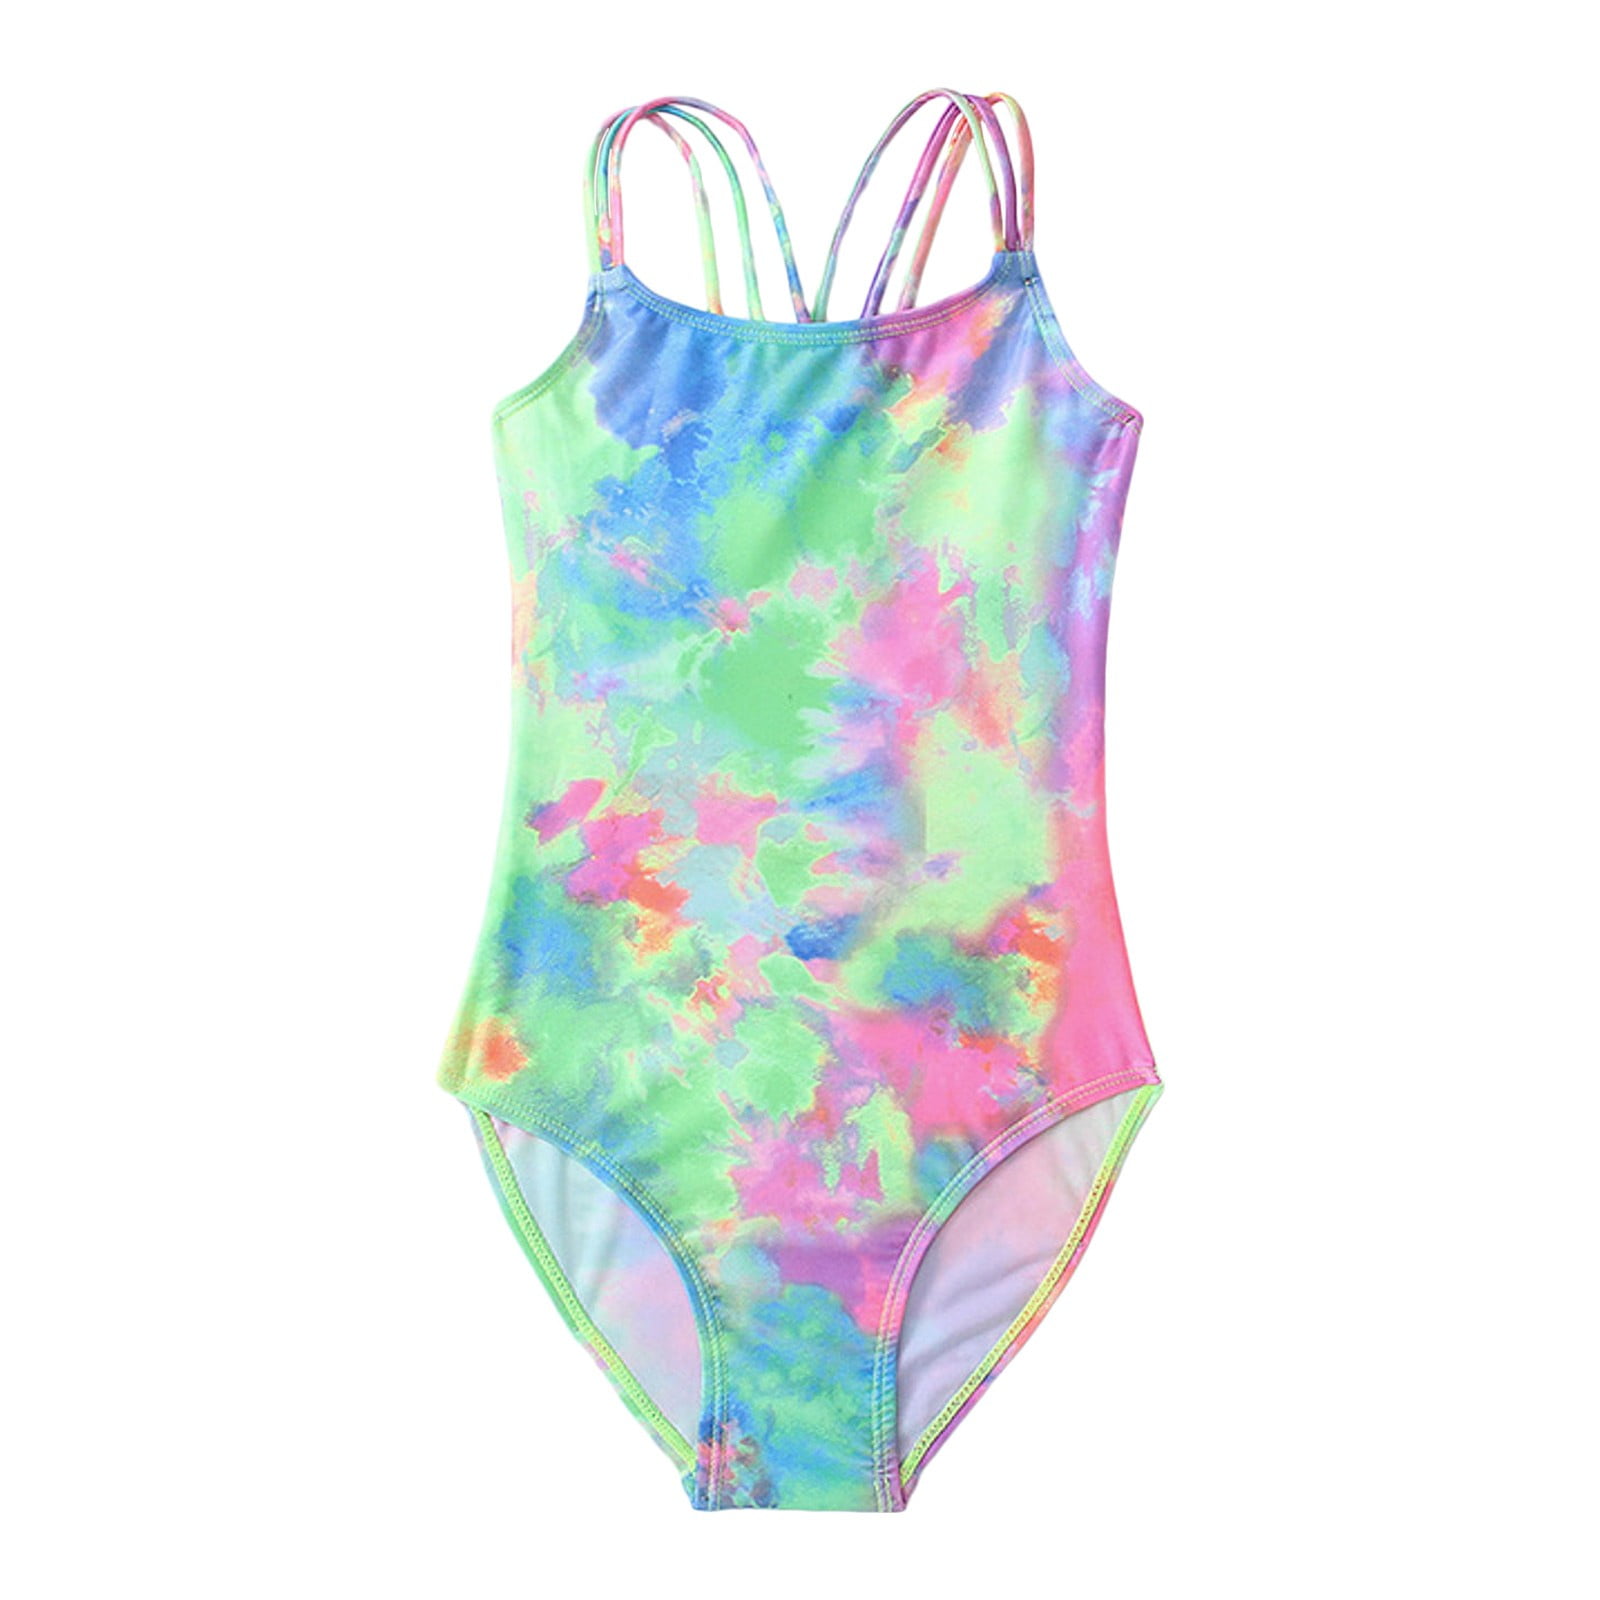 Dr.Eam Girls 1 Piece Swimsuit Cut Out Swimwear Summer Casual Tie Dye ...